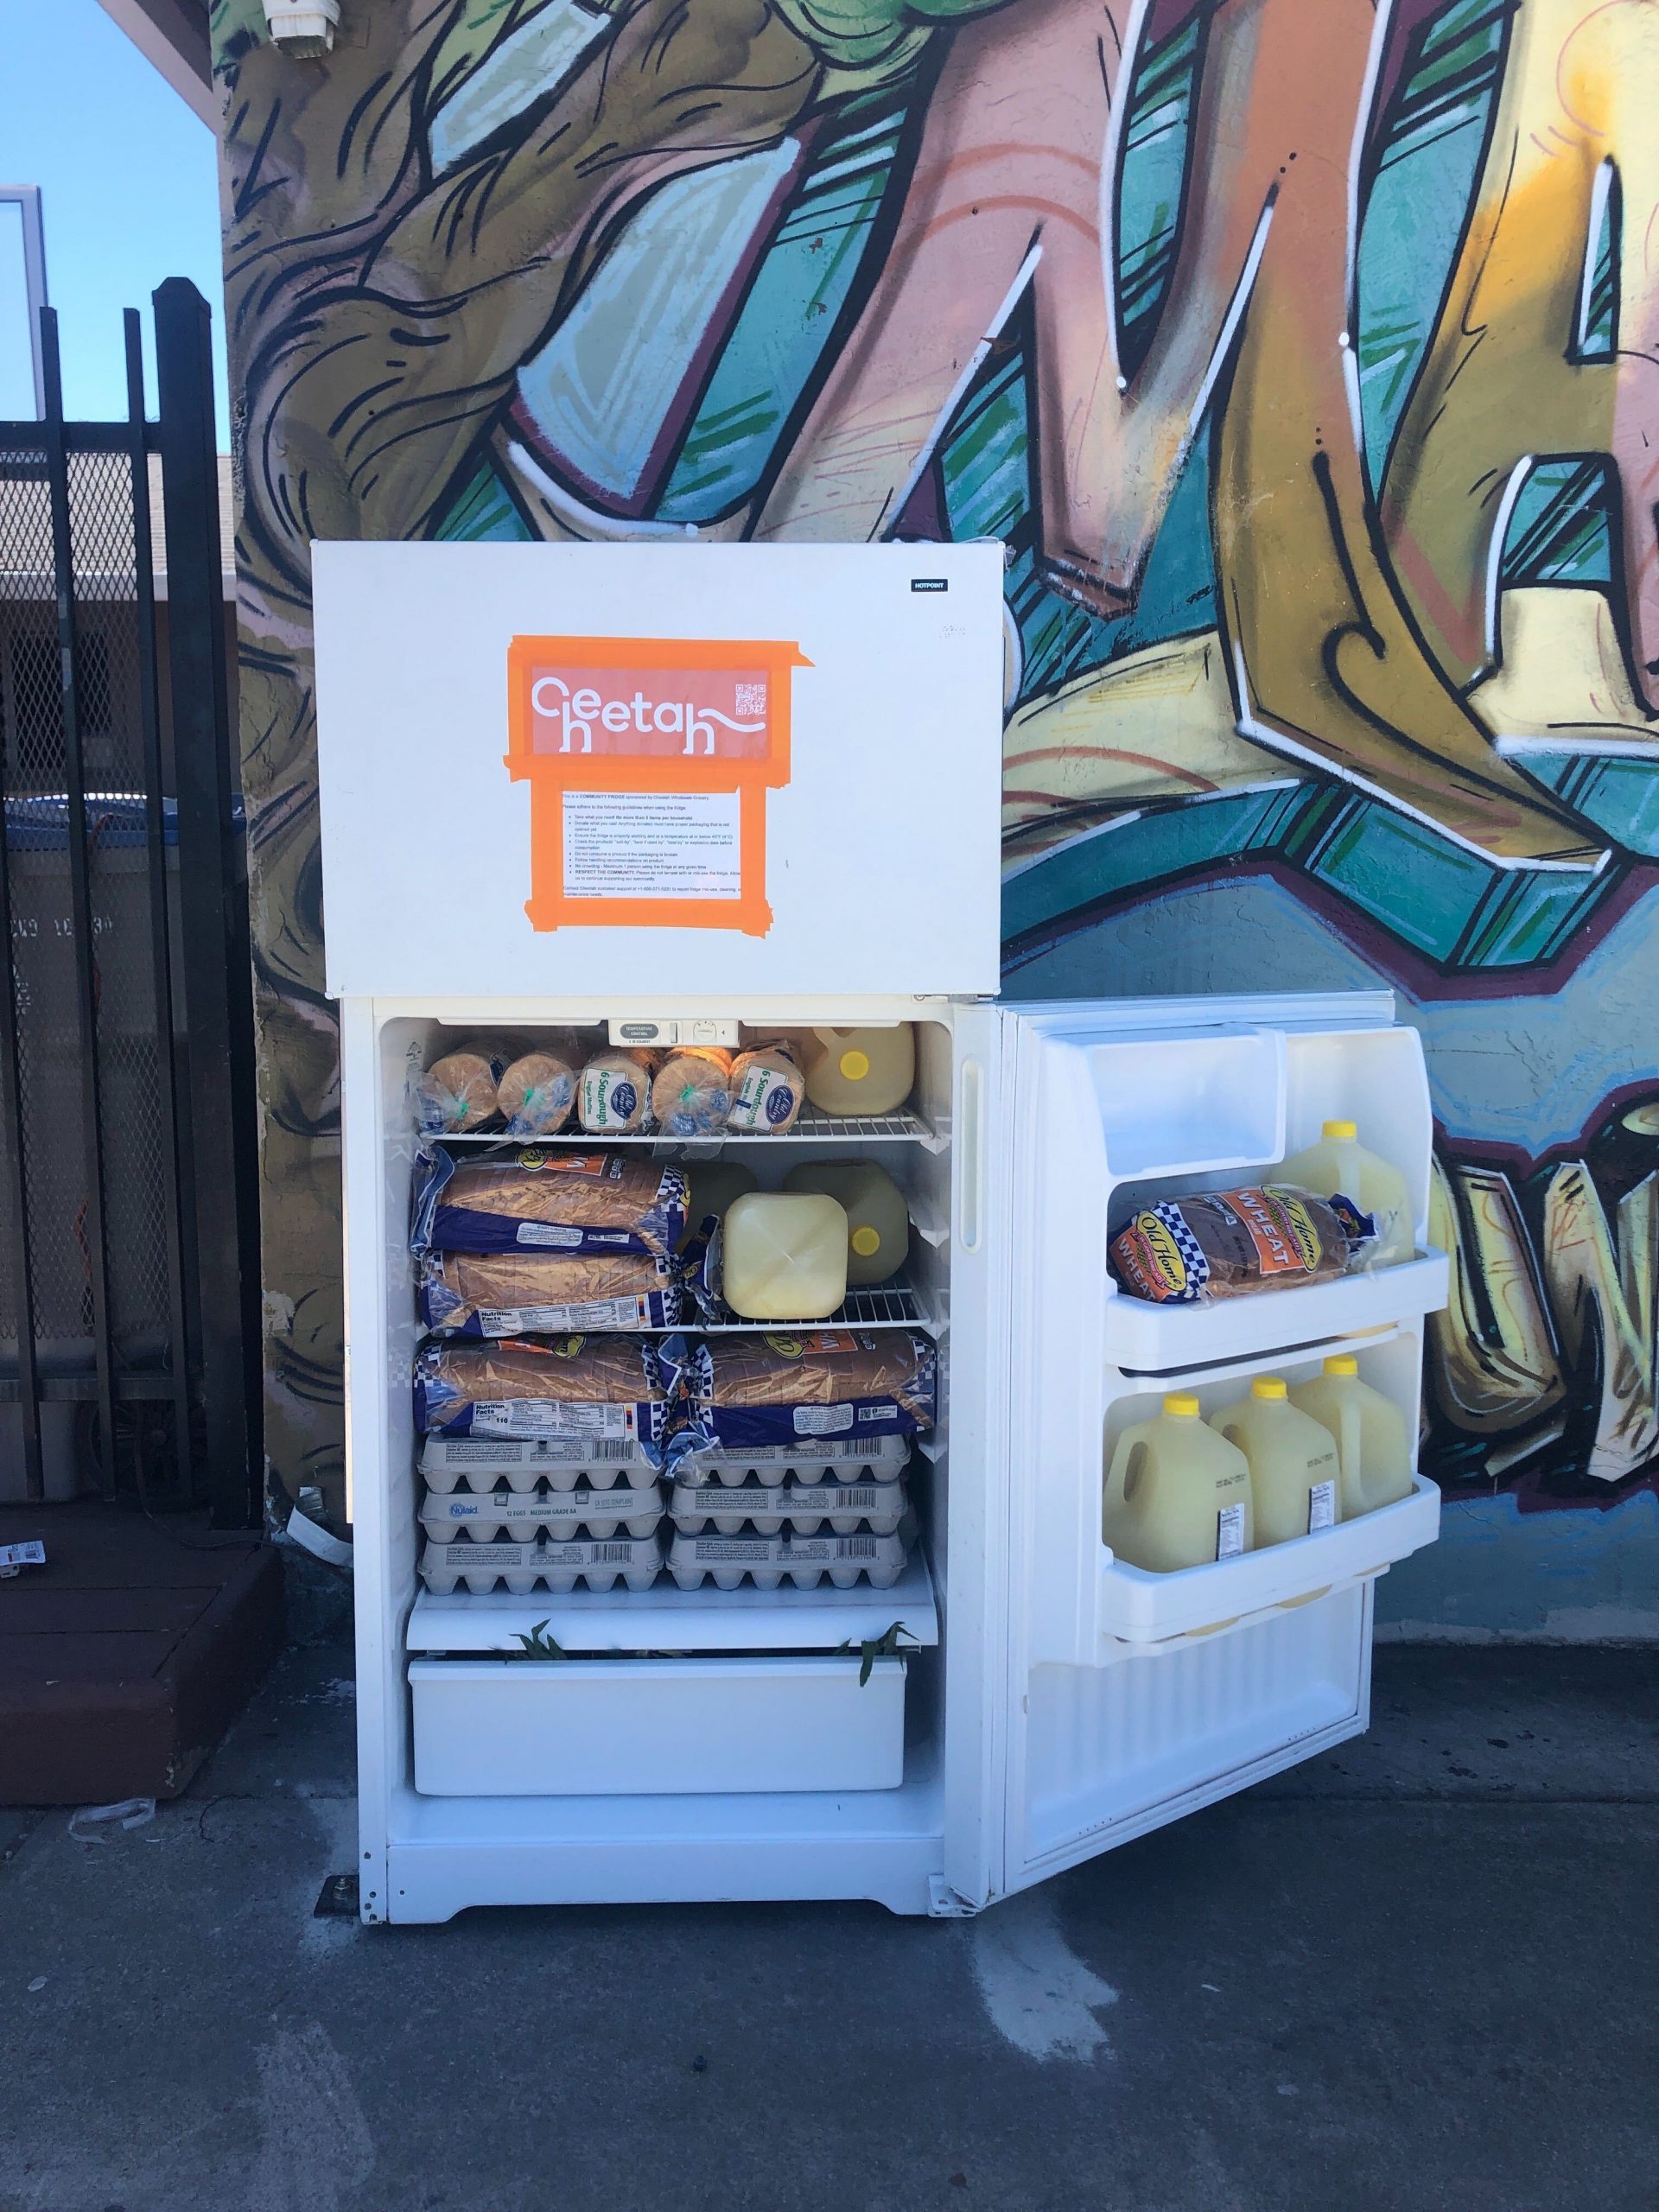 An open small refrigerator door with "Cheetah" in orange logo. The fridge has bread, juice, and eggs.